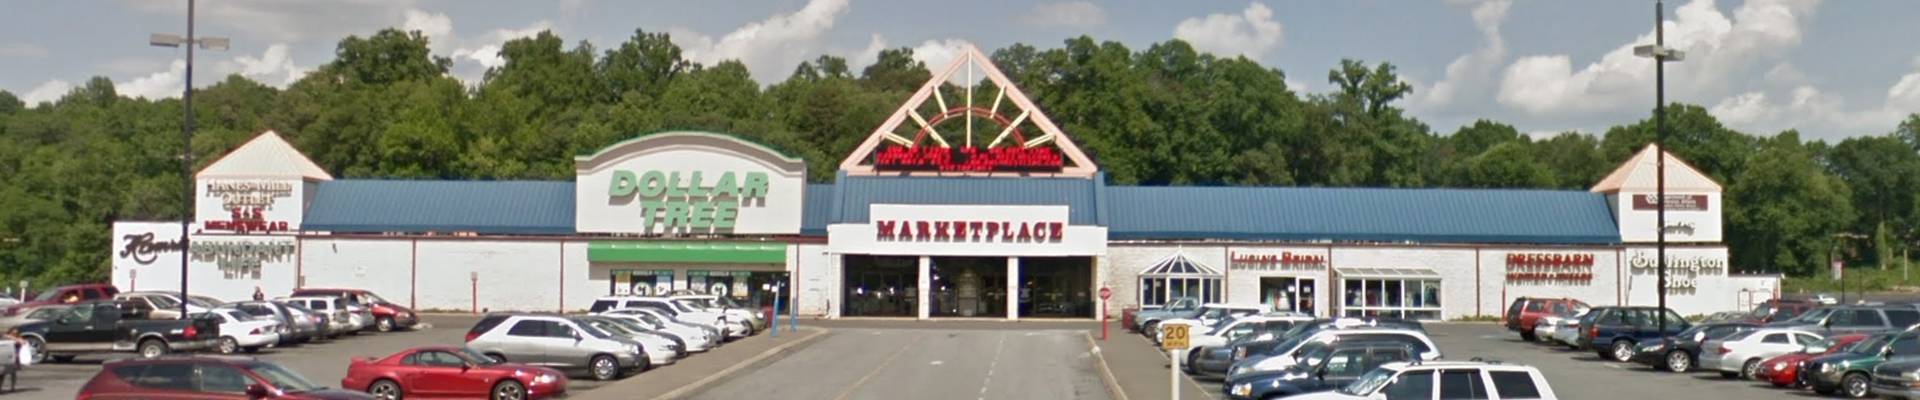 Marketplace Mall - Winston-Salem, North Carolina